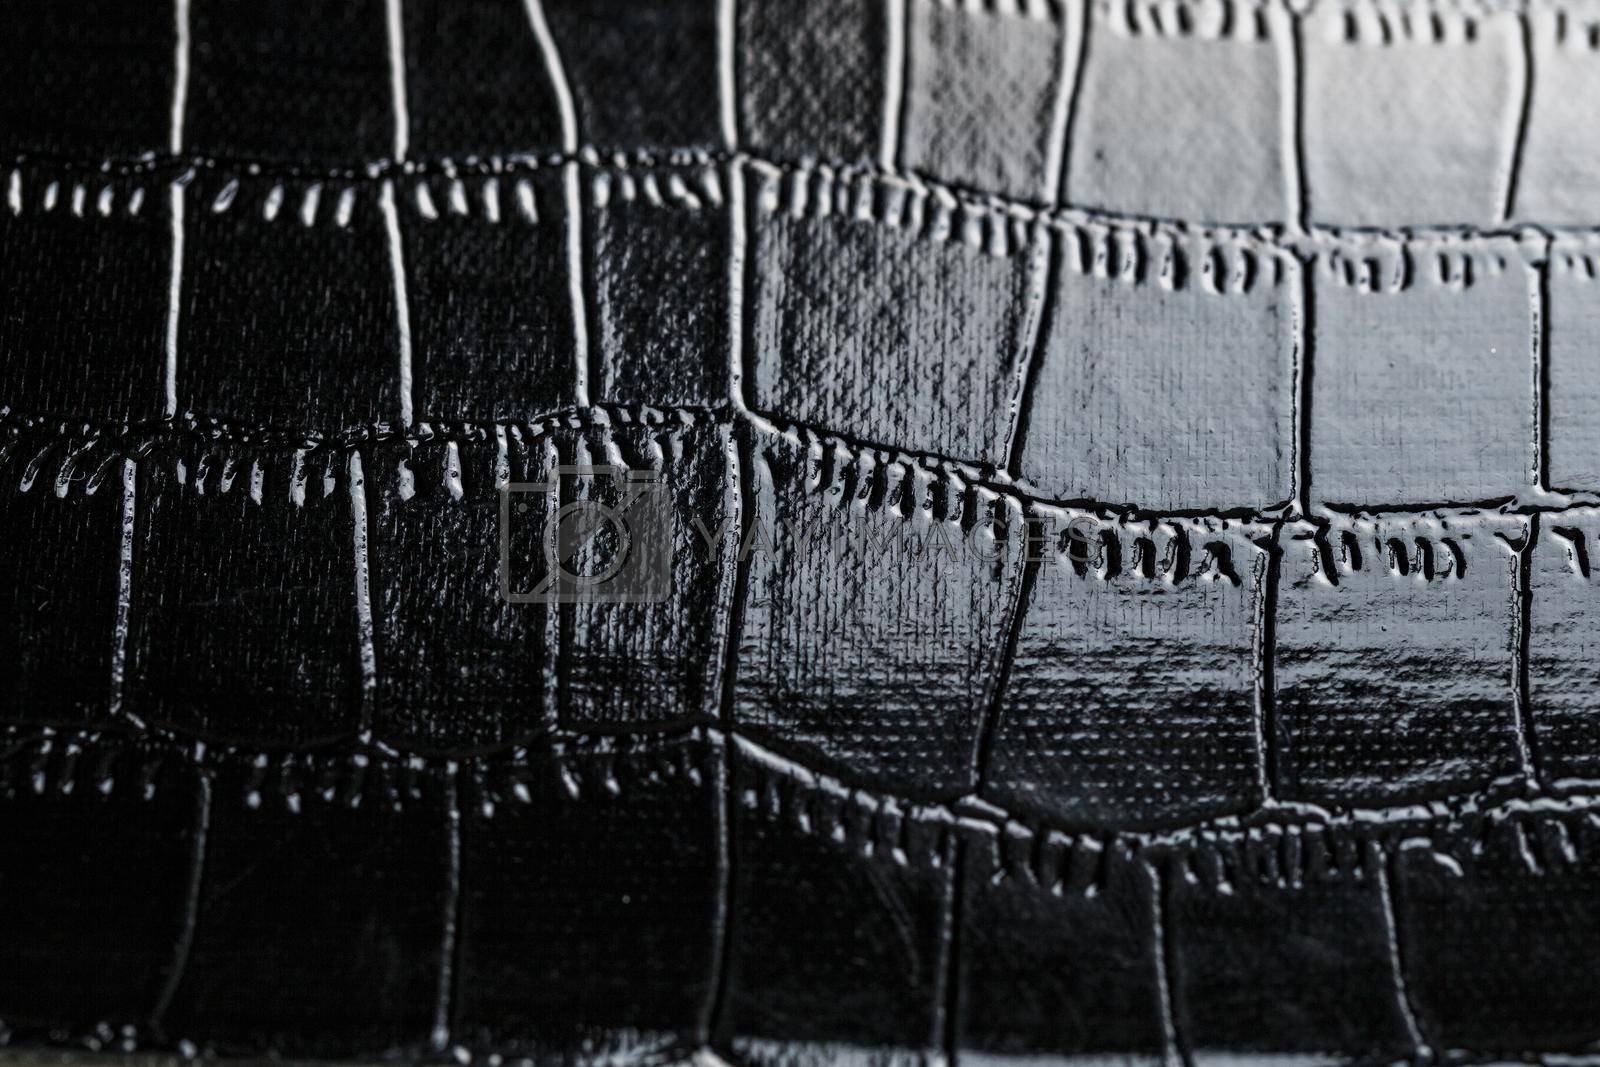 Black crocodile skin texture as background in full screen closeup